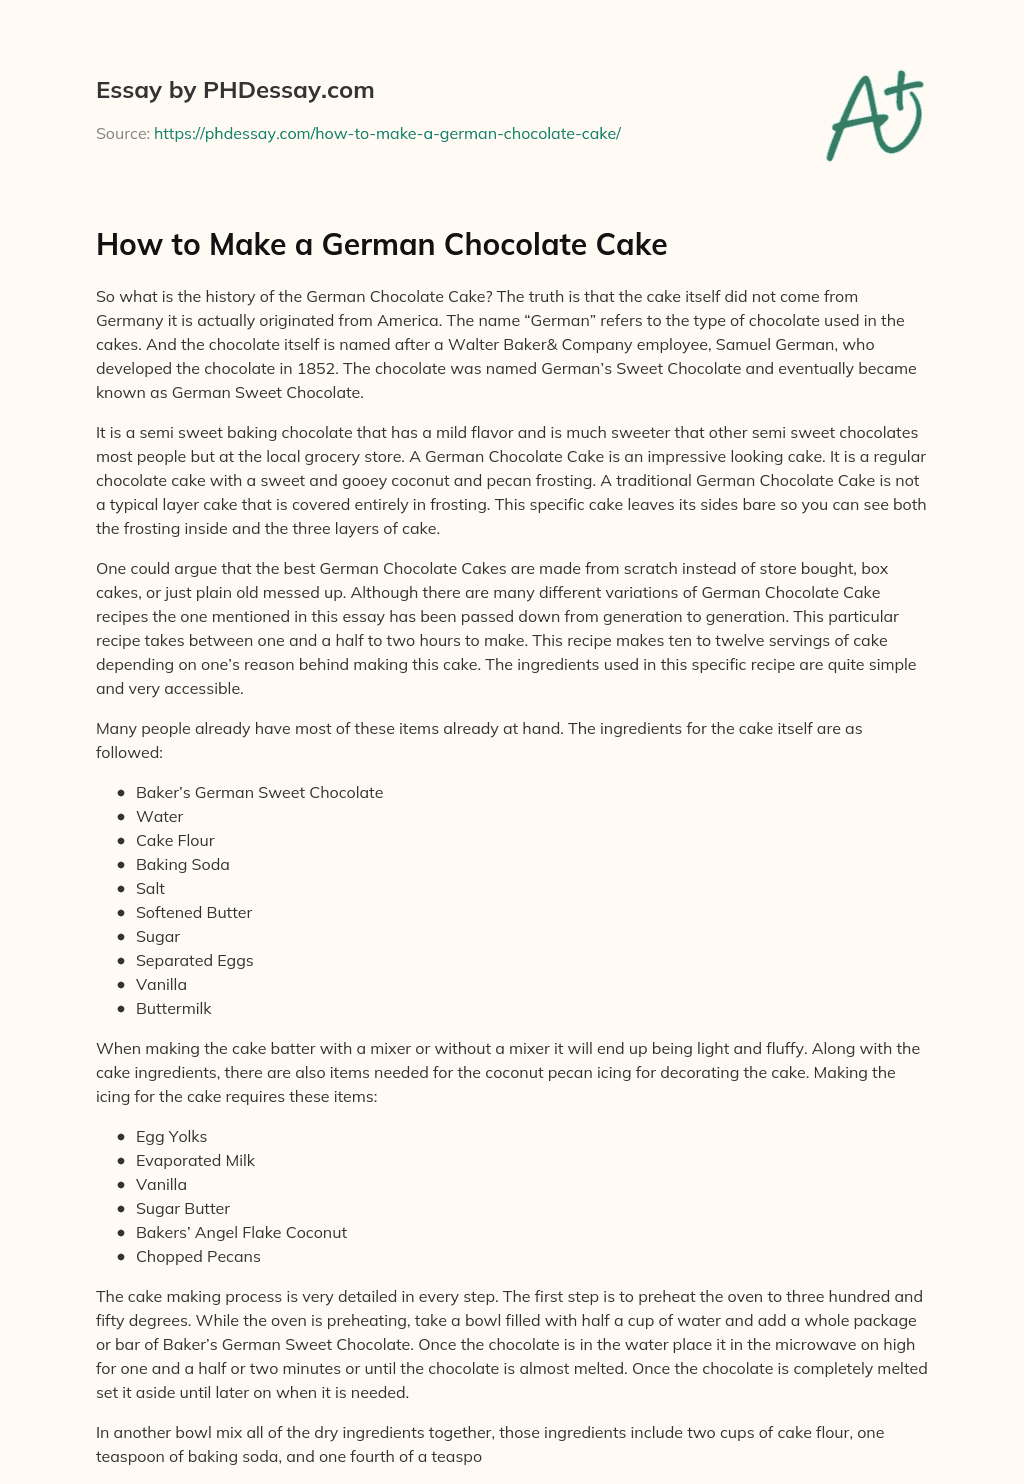 How to Make a German Chocolate Cake essay